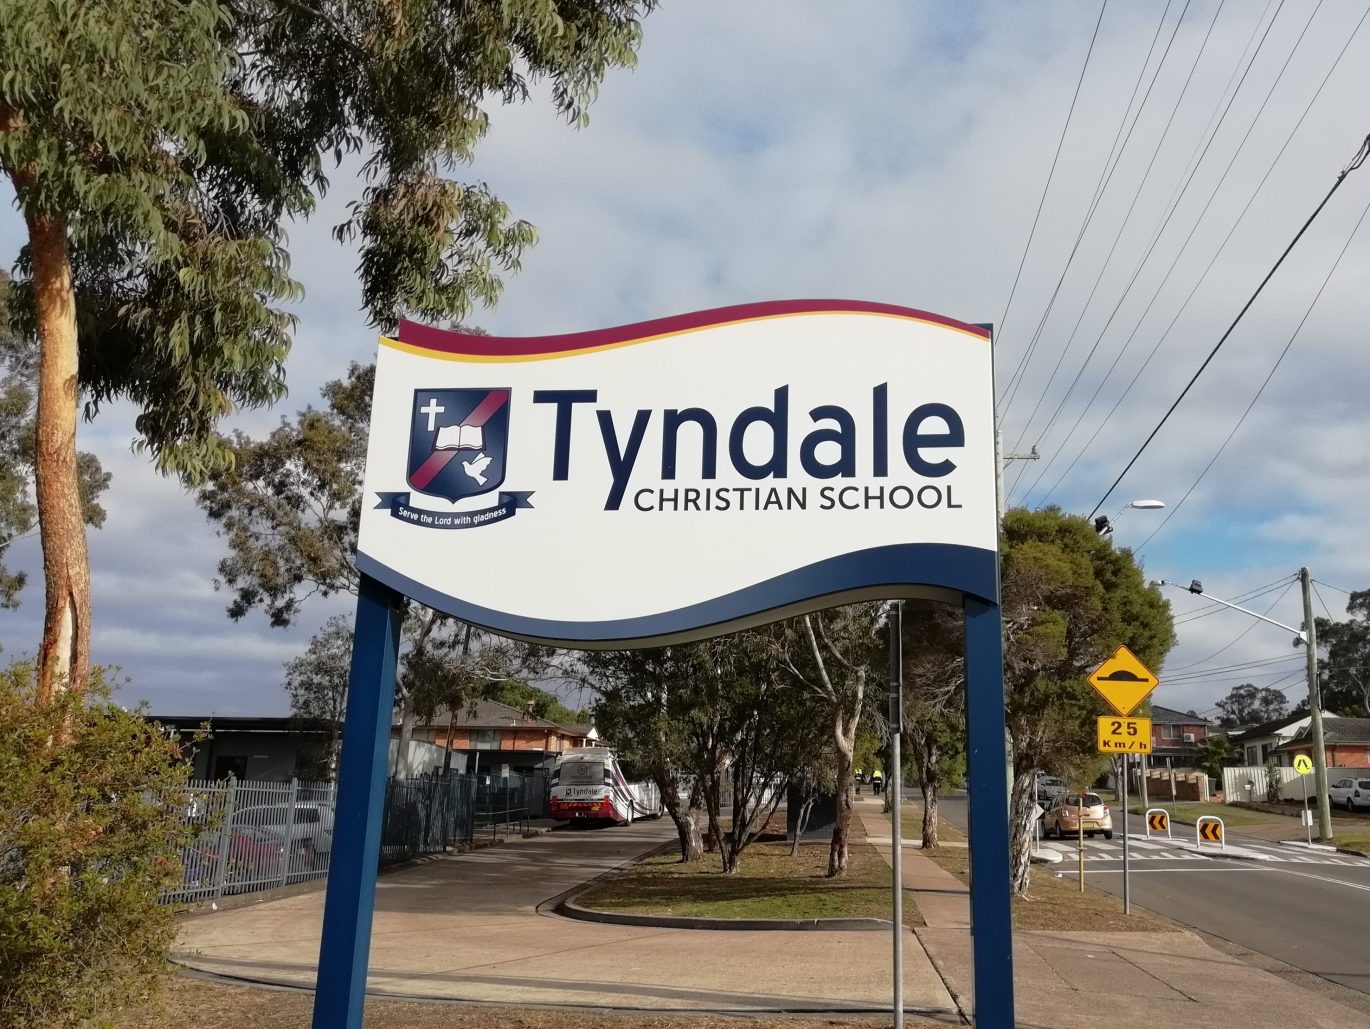 Team member Bianca visits Tyndale Christian School in Australia